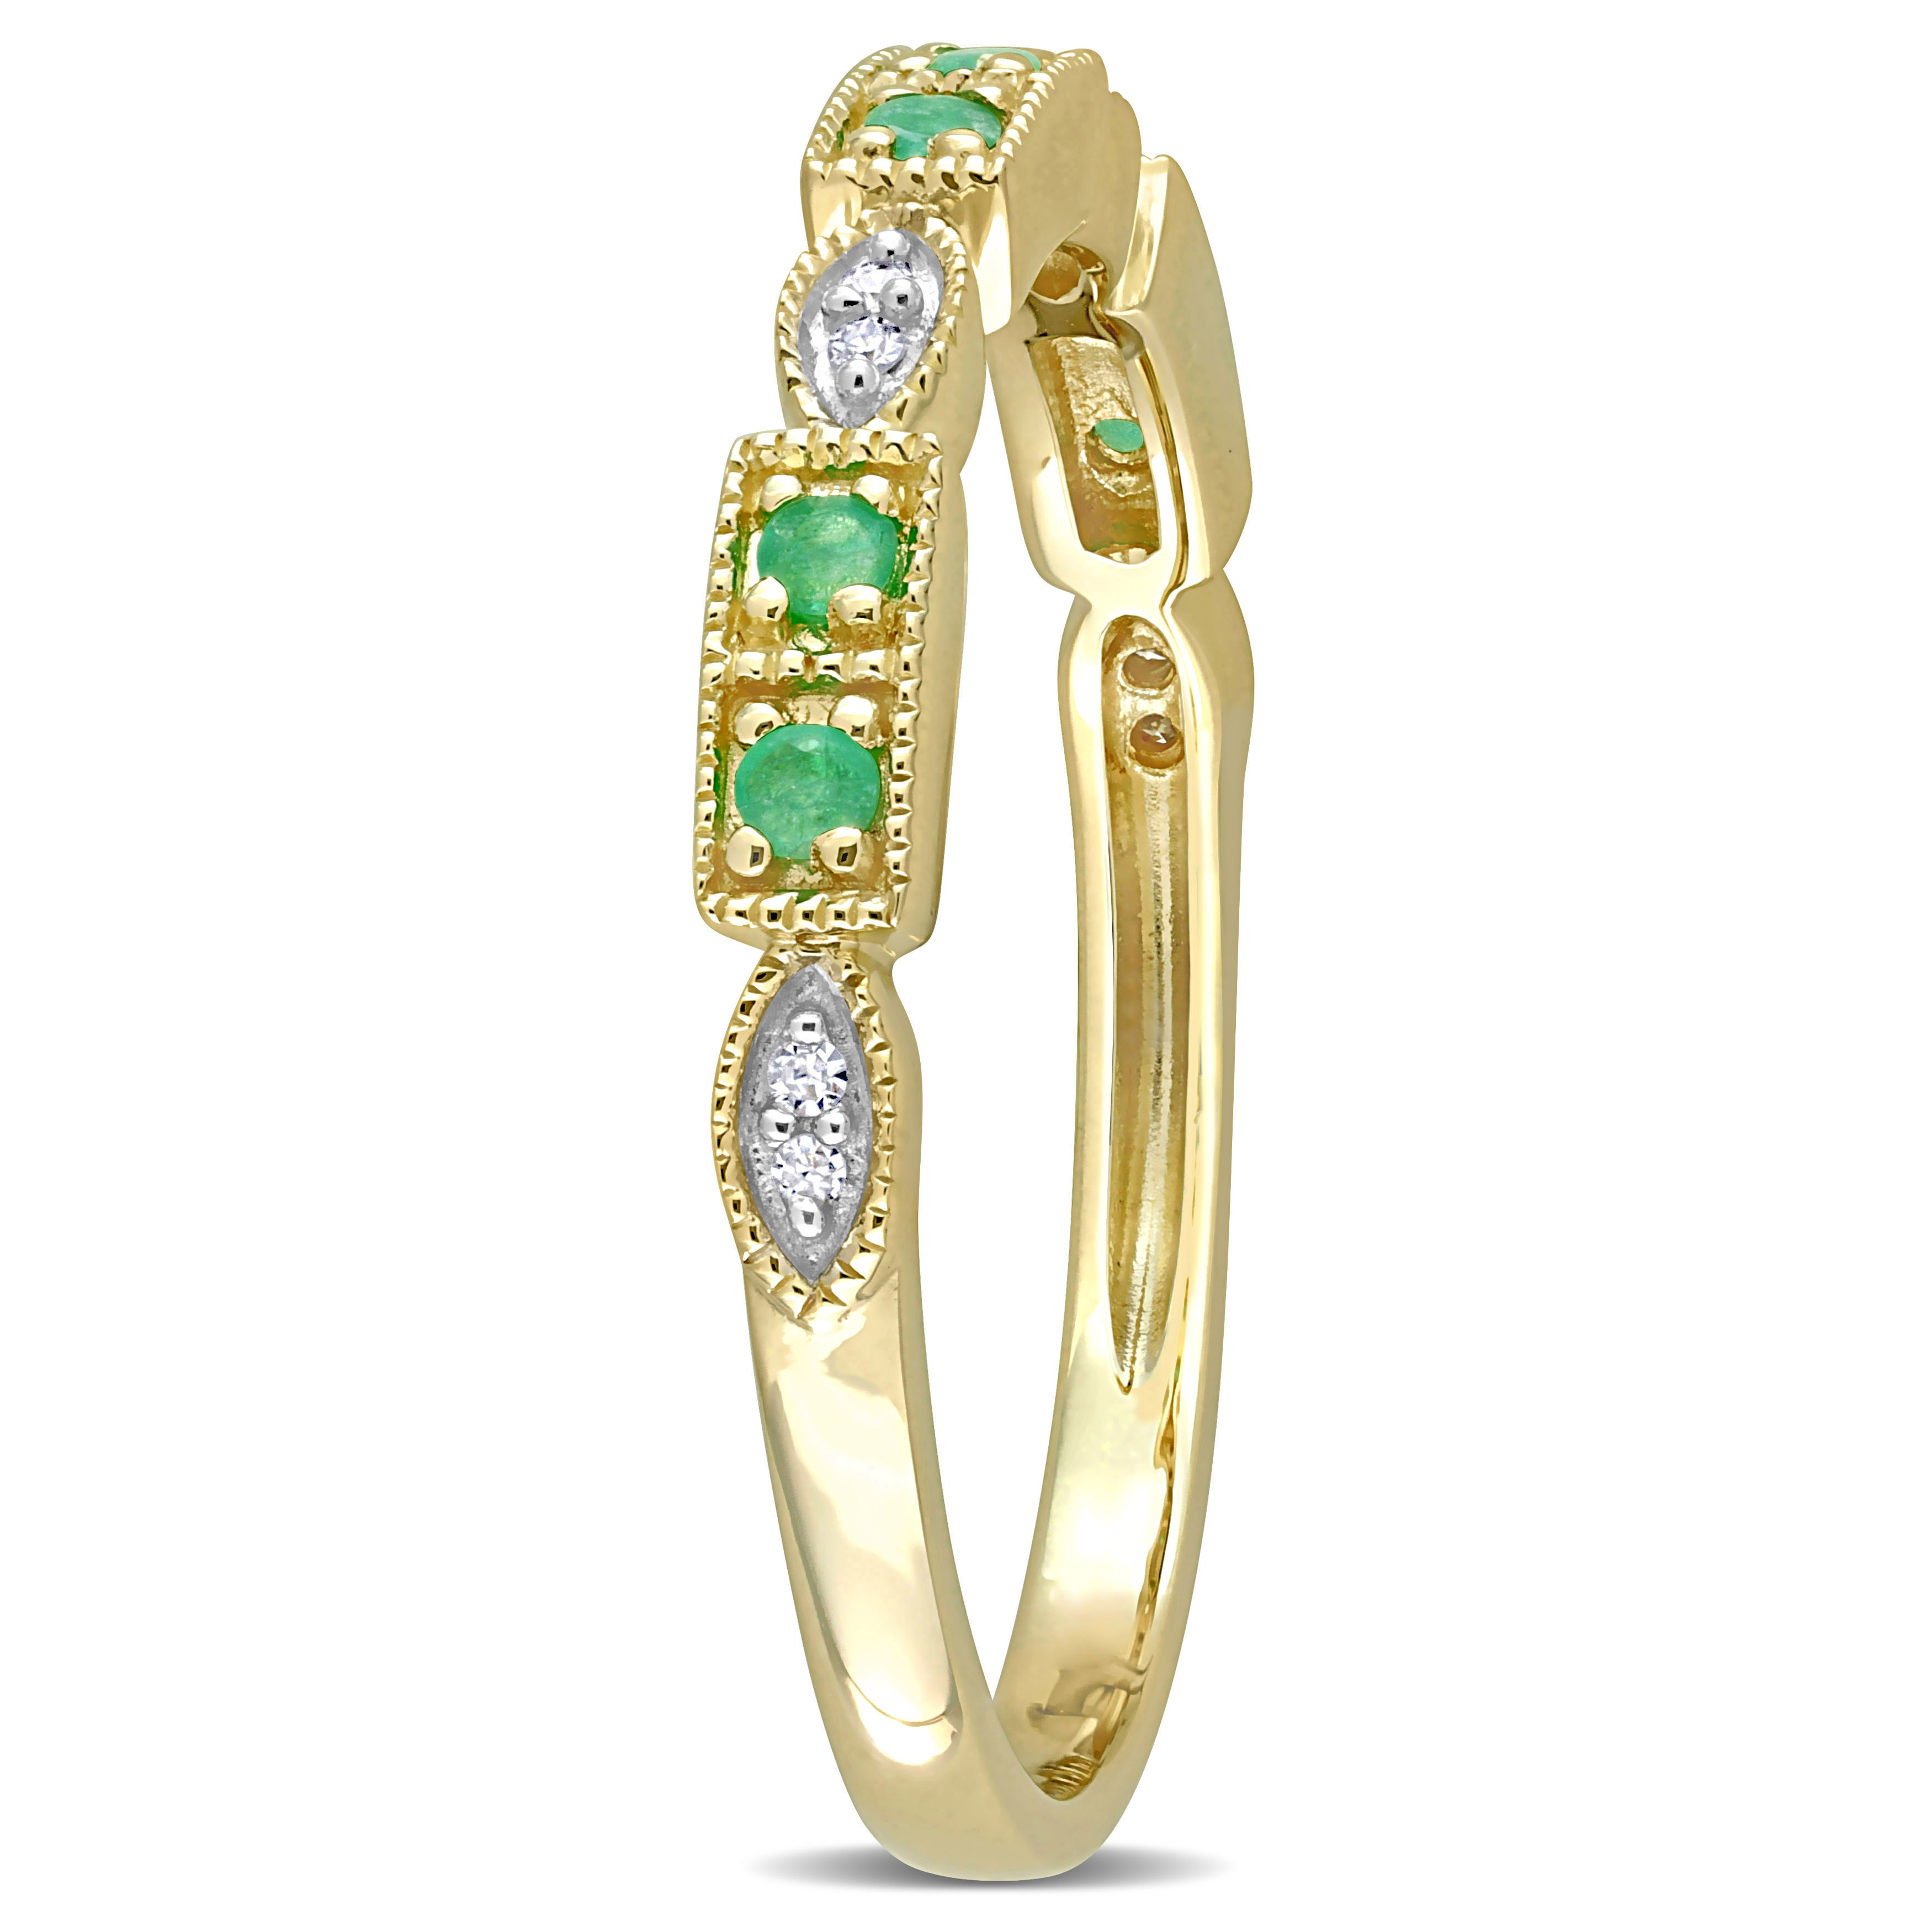 1/8 CT TGW Emerald and Diamond Accent Semi-Eternity Ring in 10k Yellow Gold